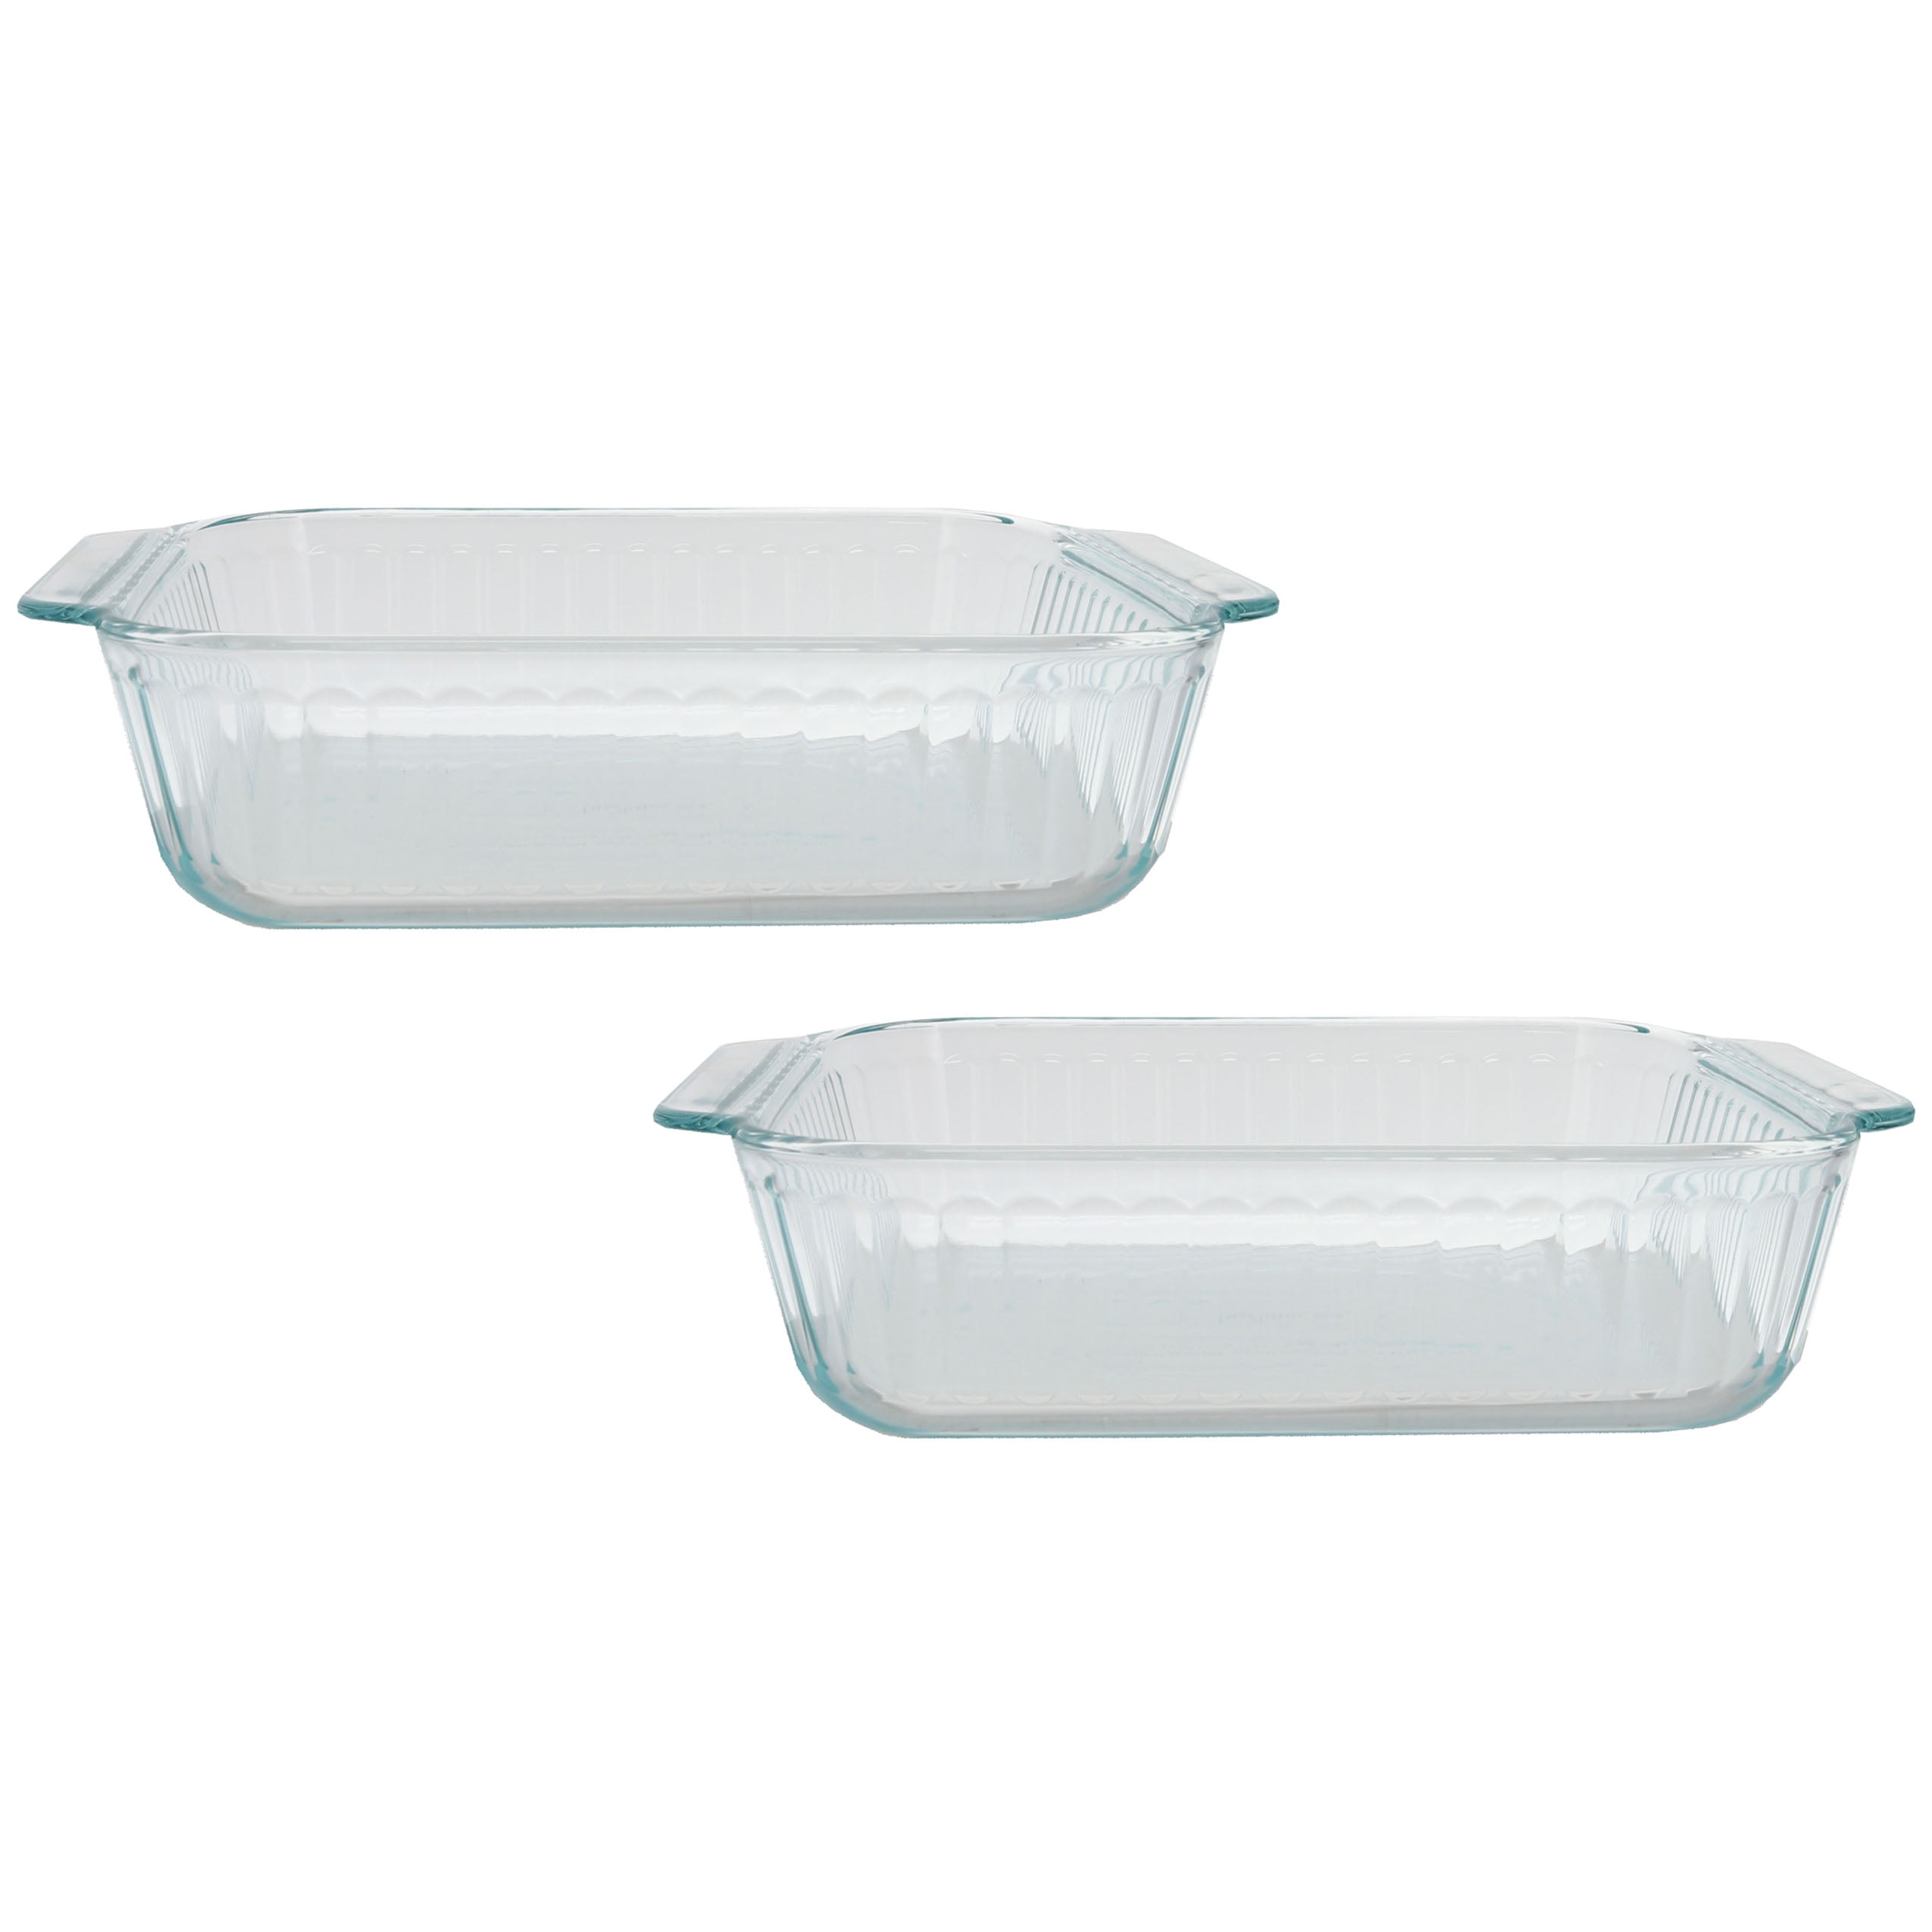 Pyrex Basics 2-Qt Glass Baking Dish with Lid, Tempered Glass Baking Dish  with Large Handles, Non-Toxic, BPA-Free Lid, Dishwashwer, Microwave,  Freezer